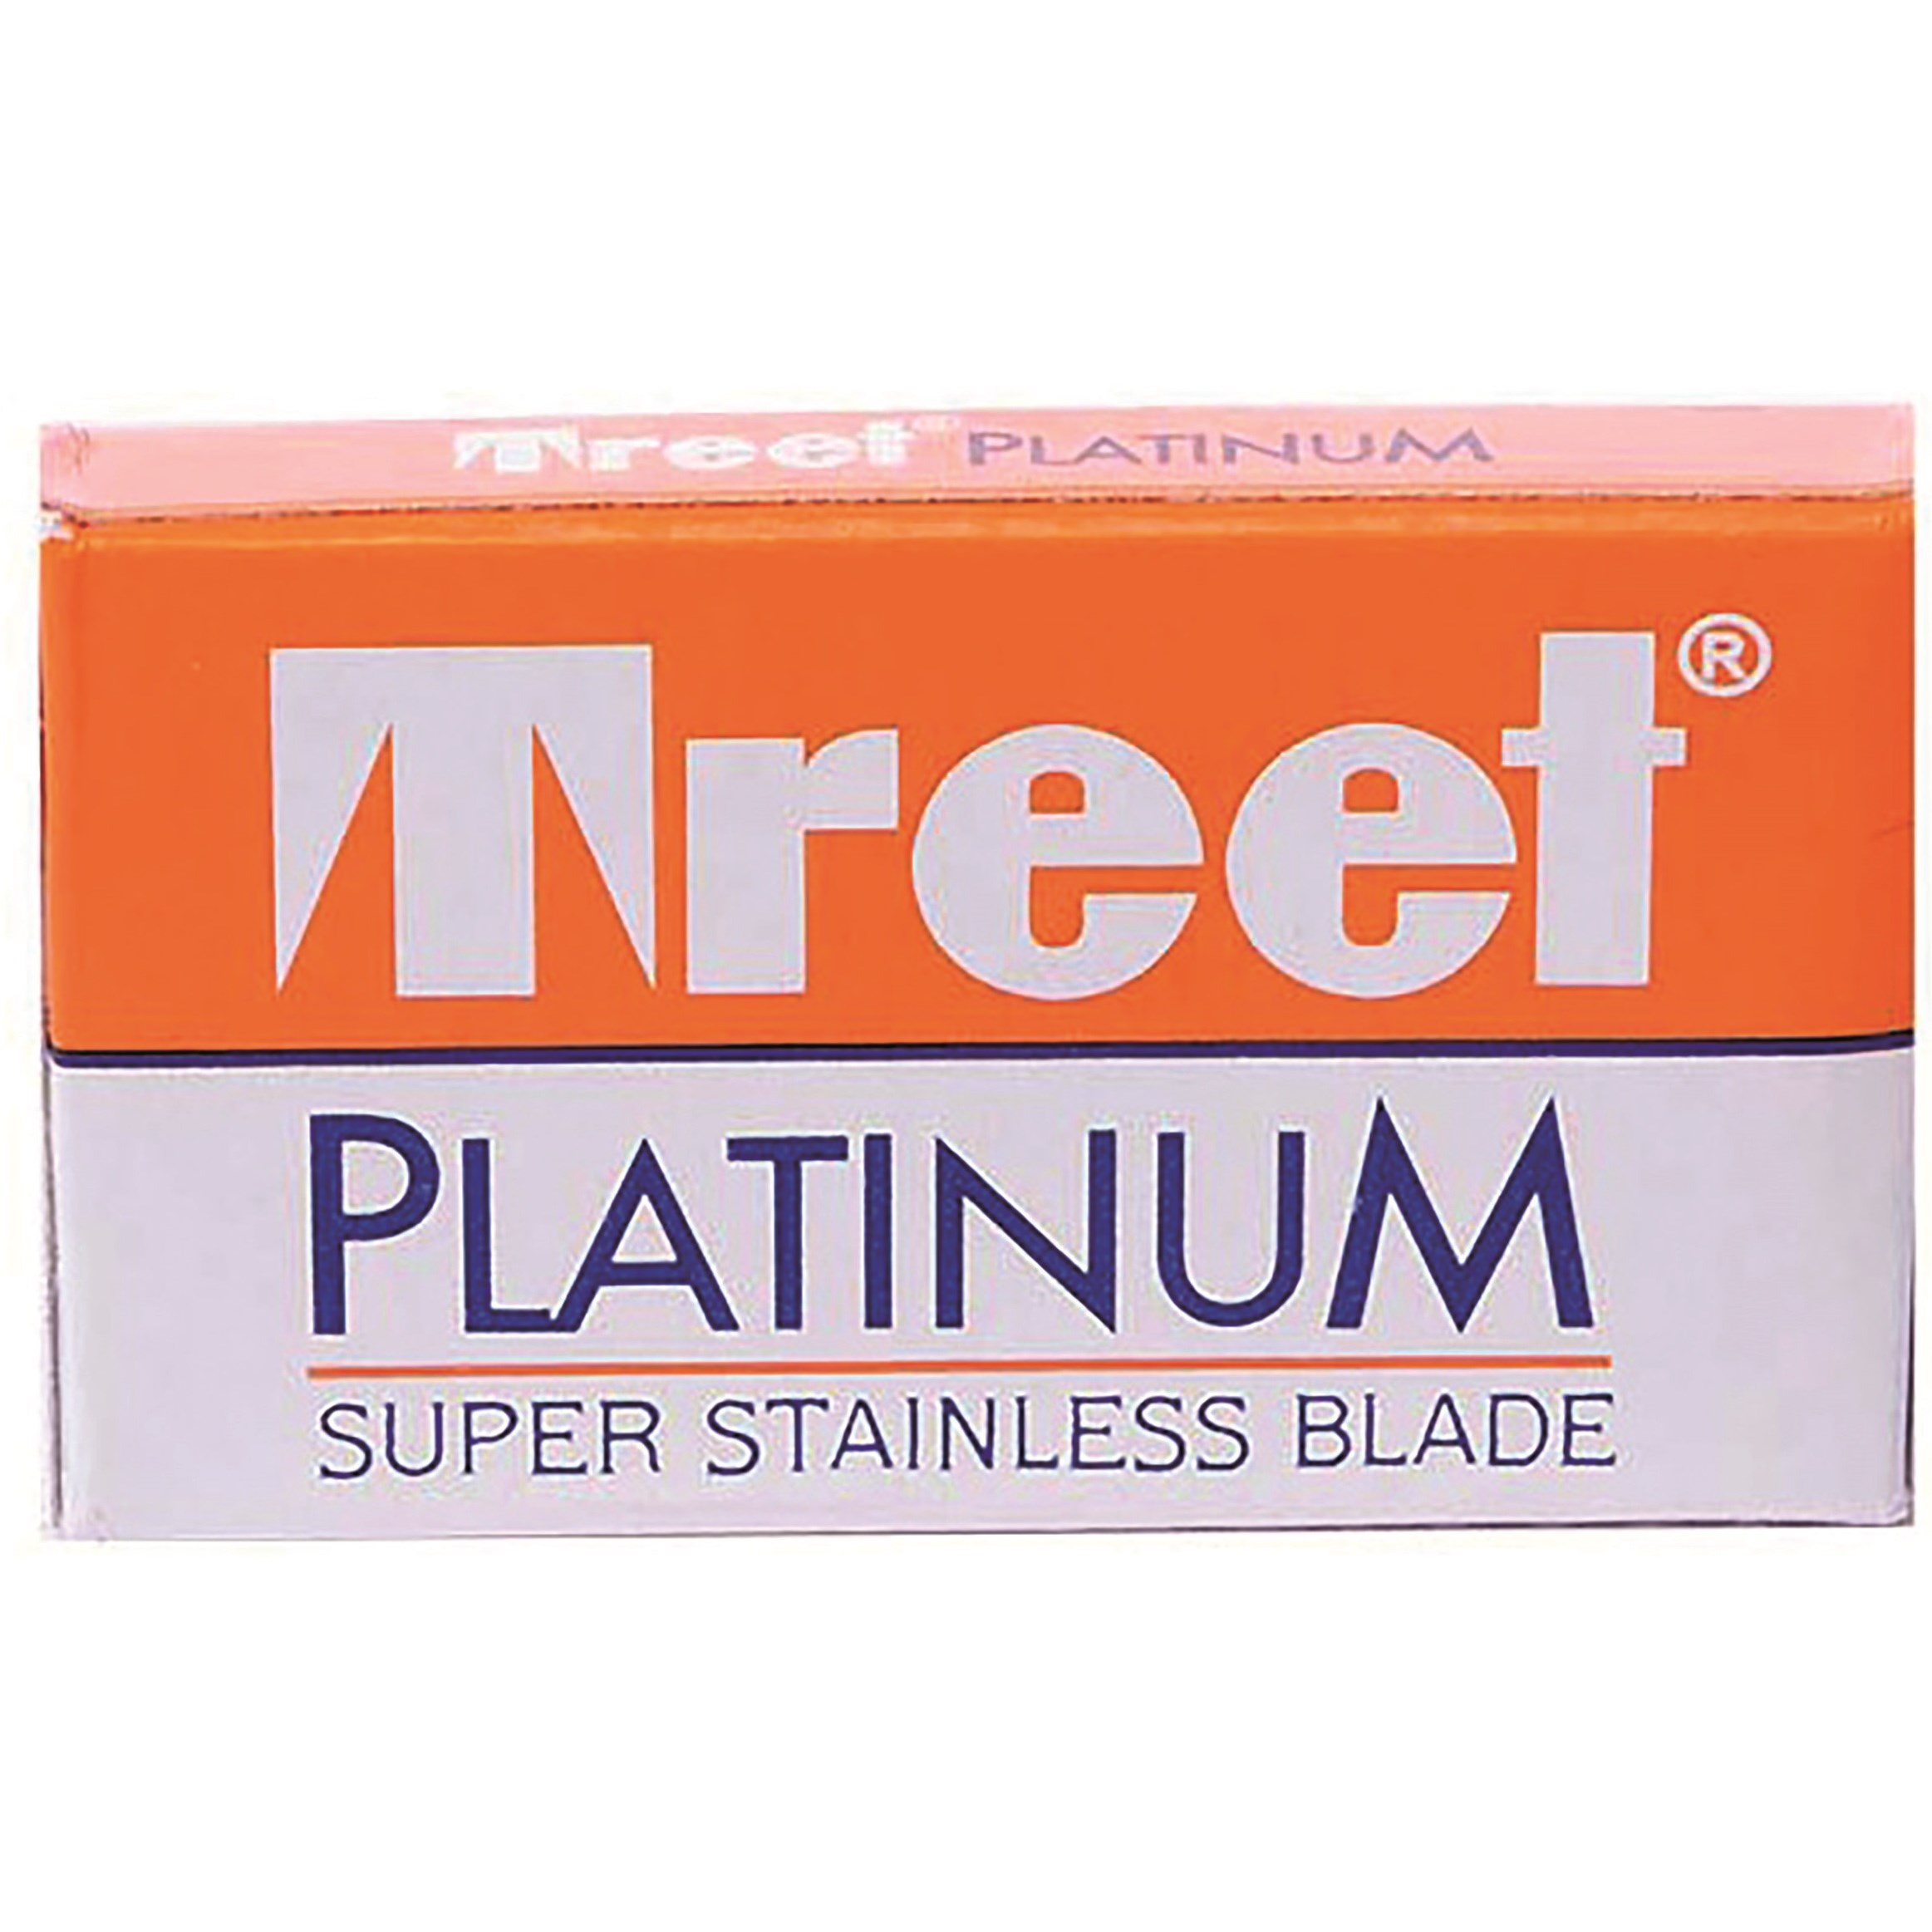 Treet Platinum Double Edge Razor Blades 5-Pack 5 st